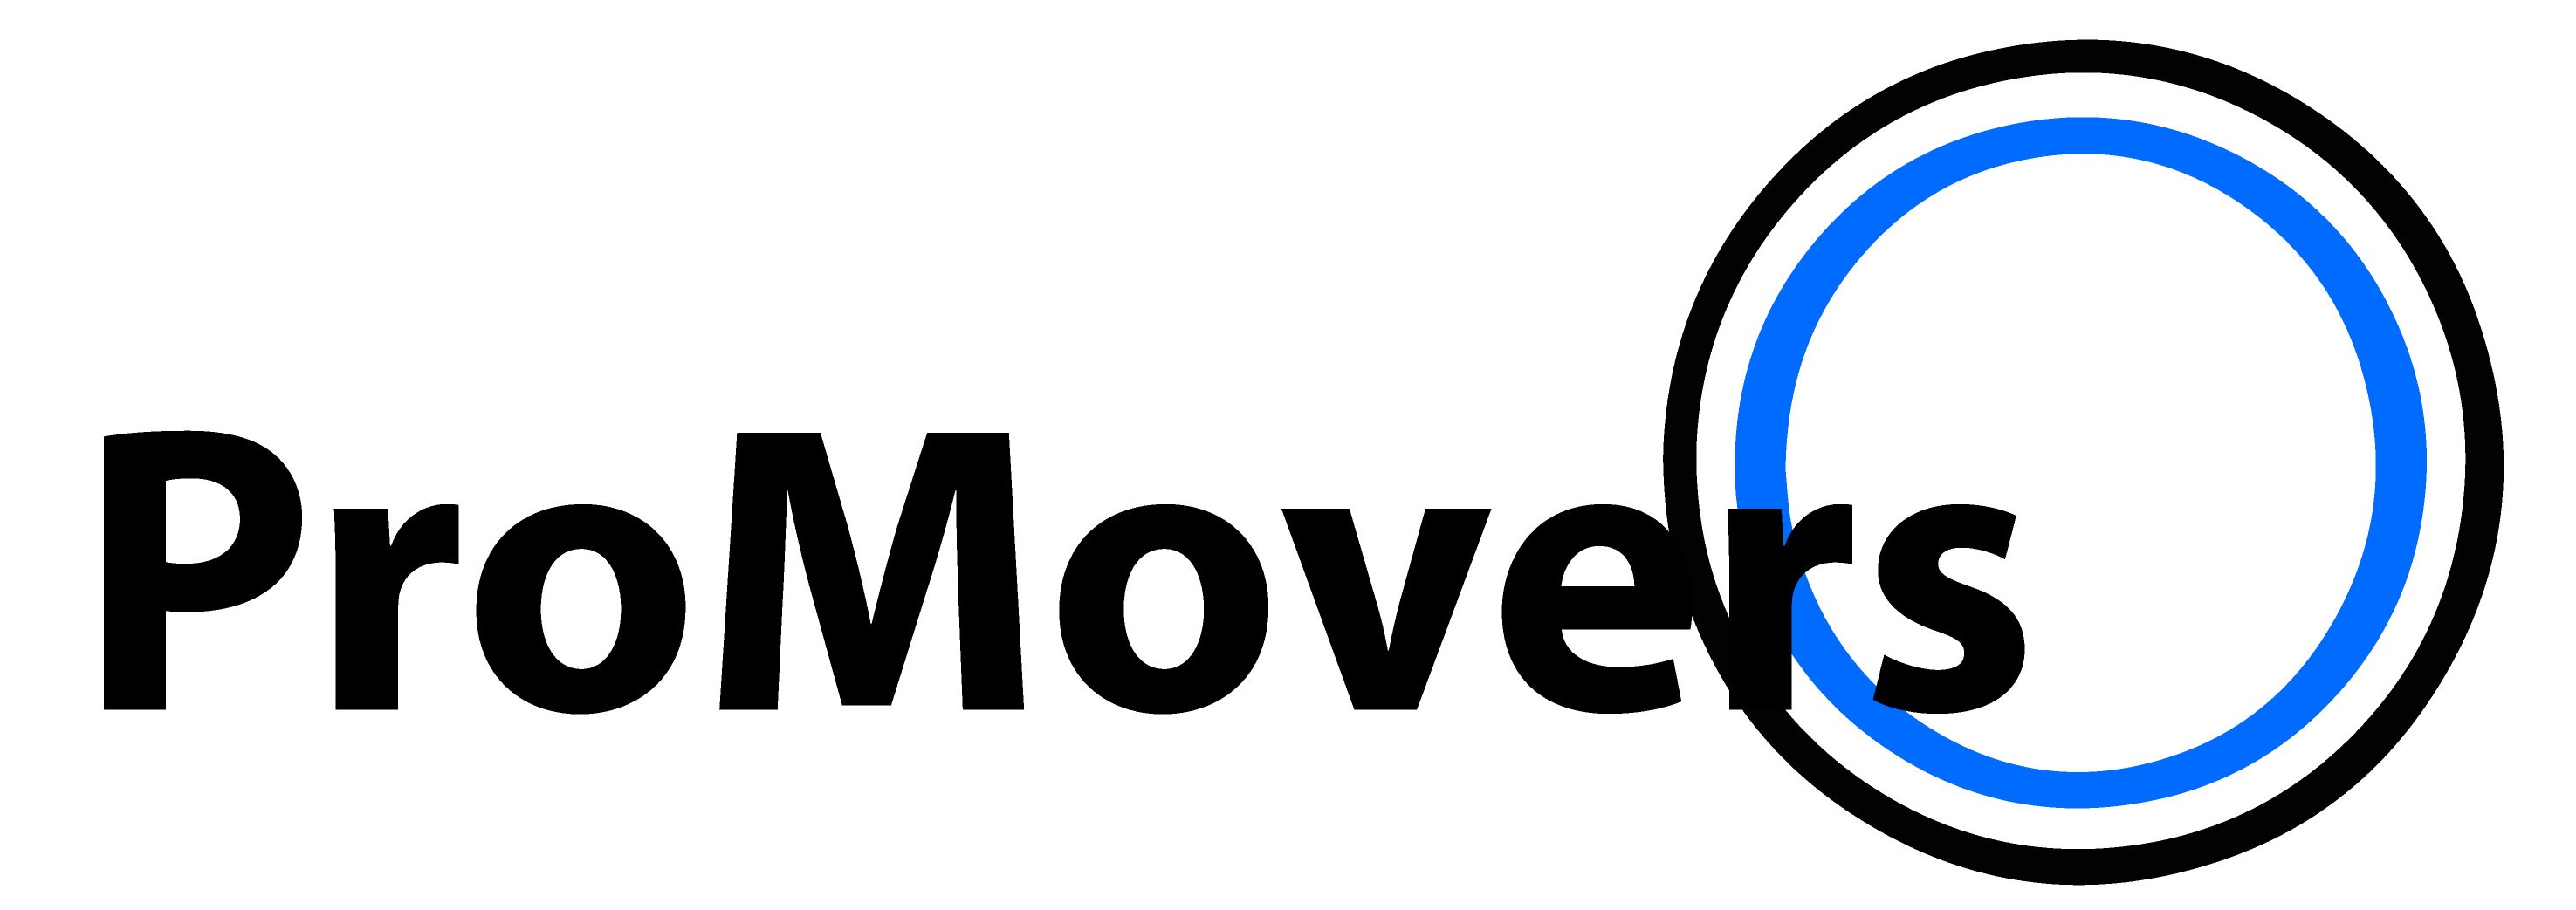 Pro Movers Customer Service